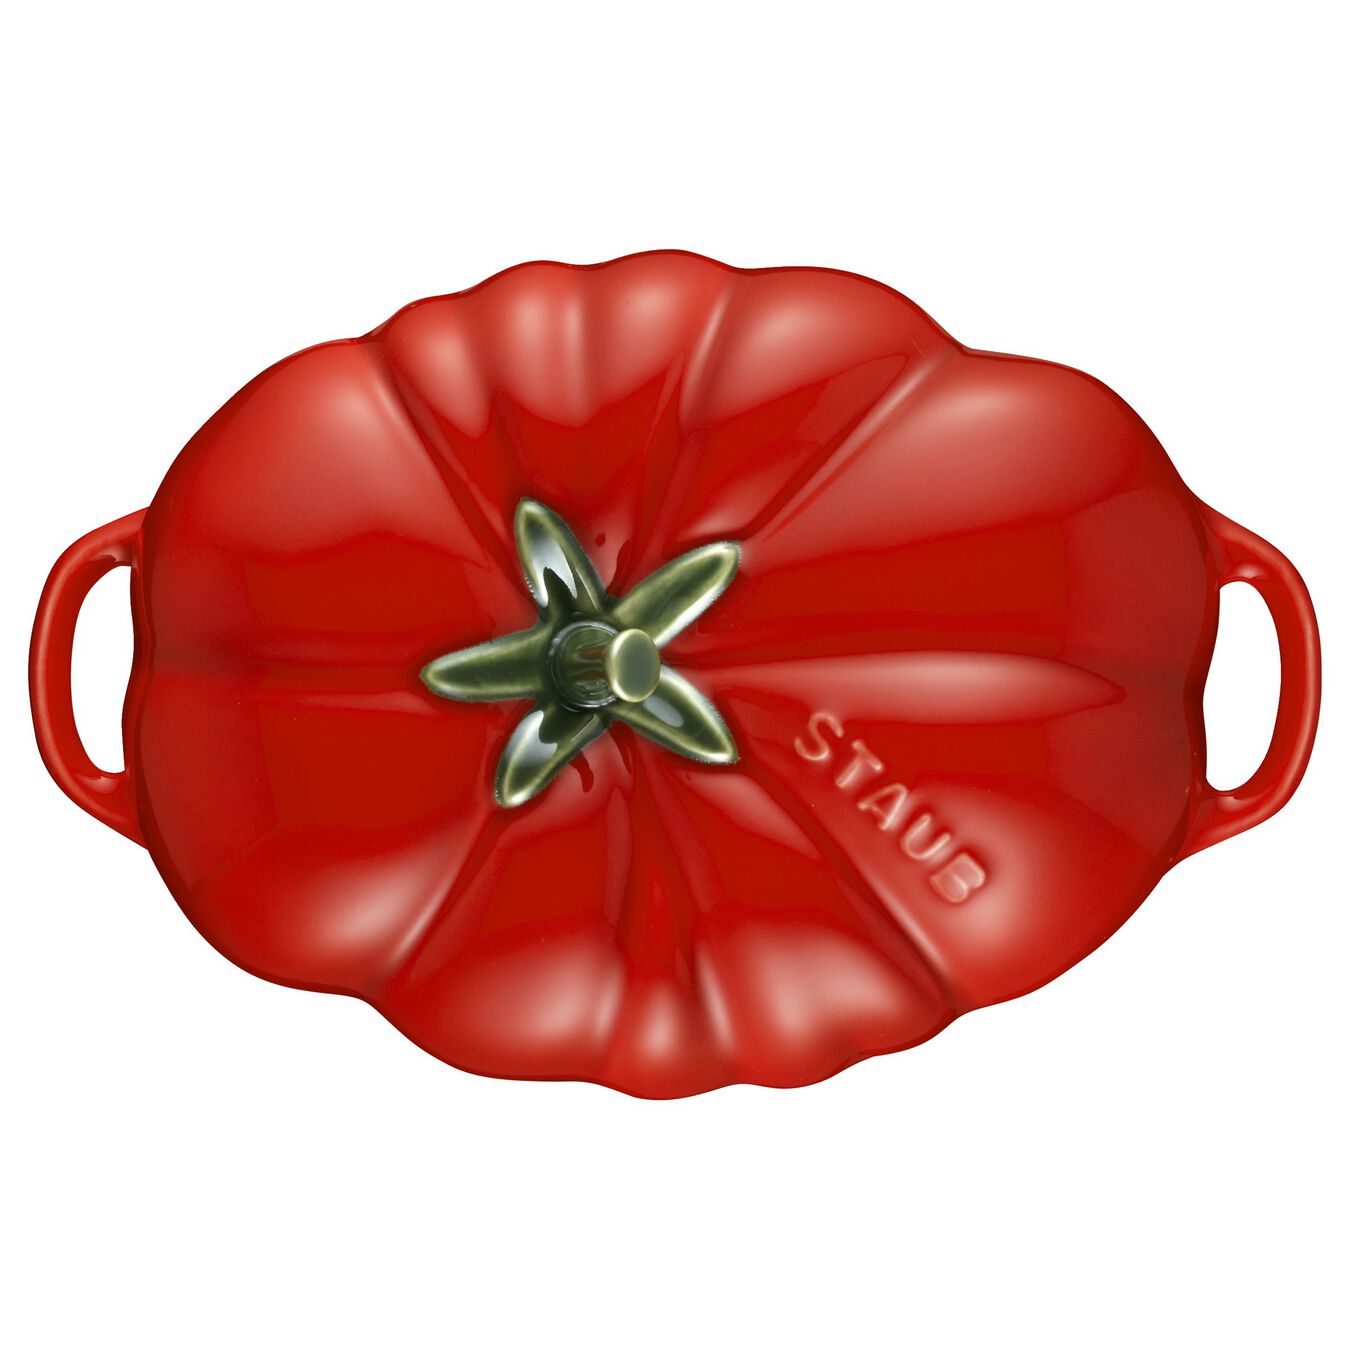 Cocotte 16 cm, Tomate, Kirsch-Rot, Keramik,,large 5